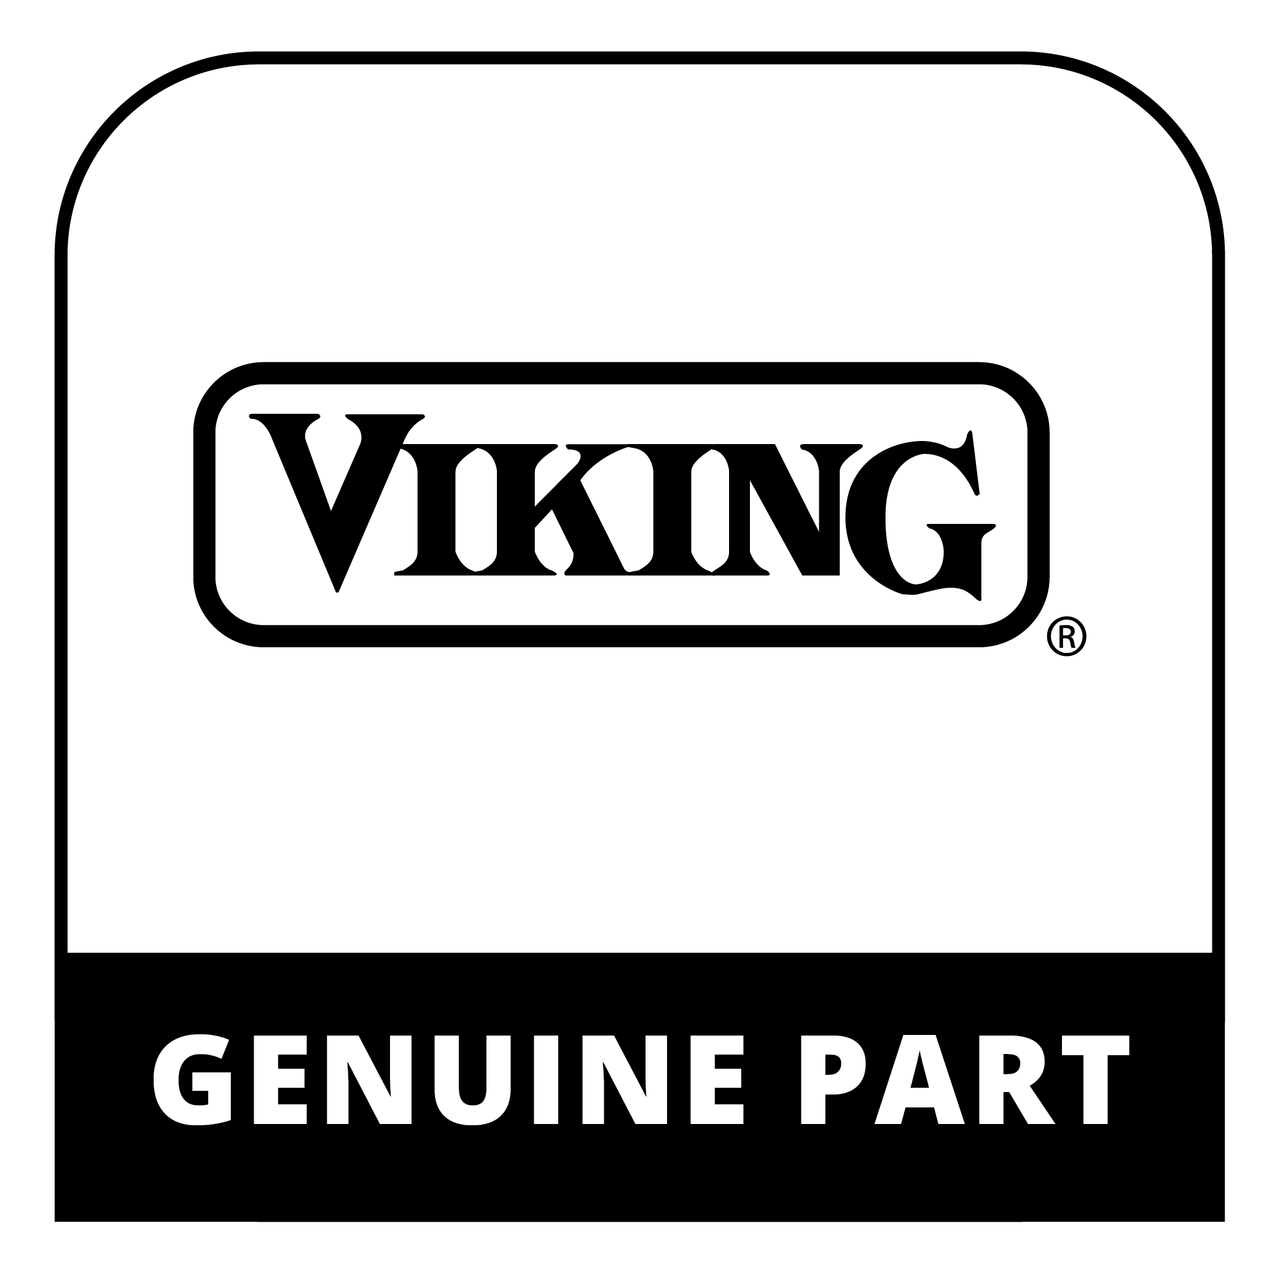 Viking 000957-100 - Door Assembly 36: (Ssbr) - Genuine Viking Part